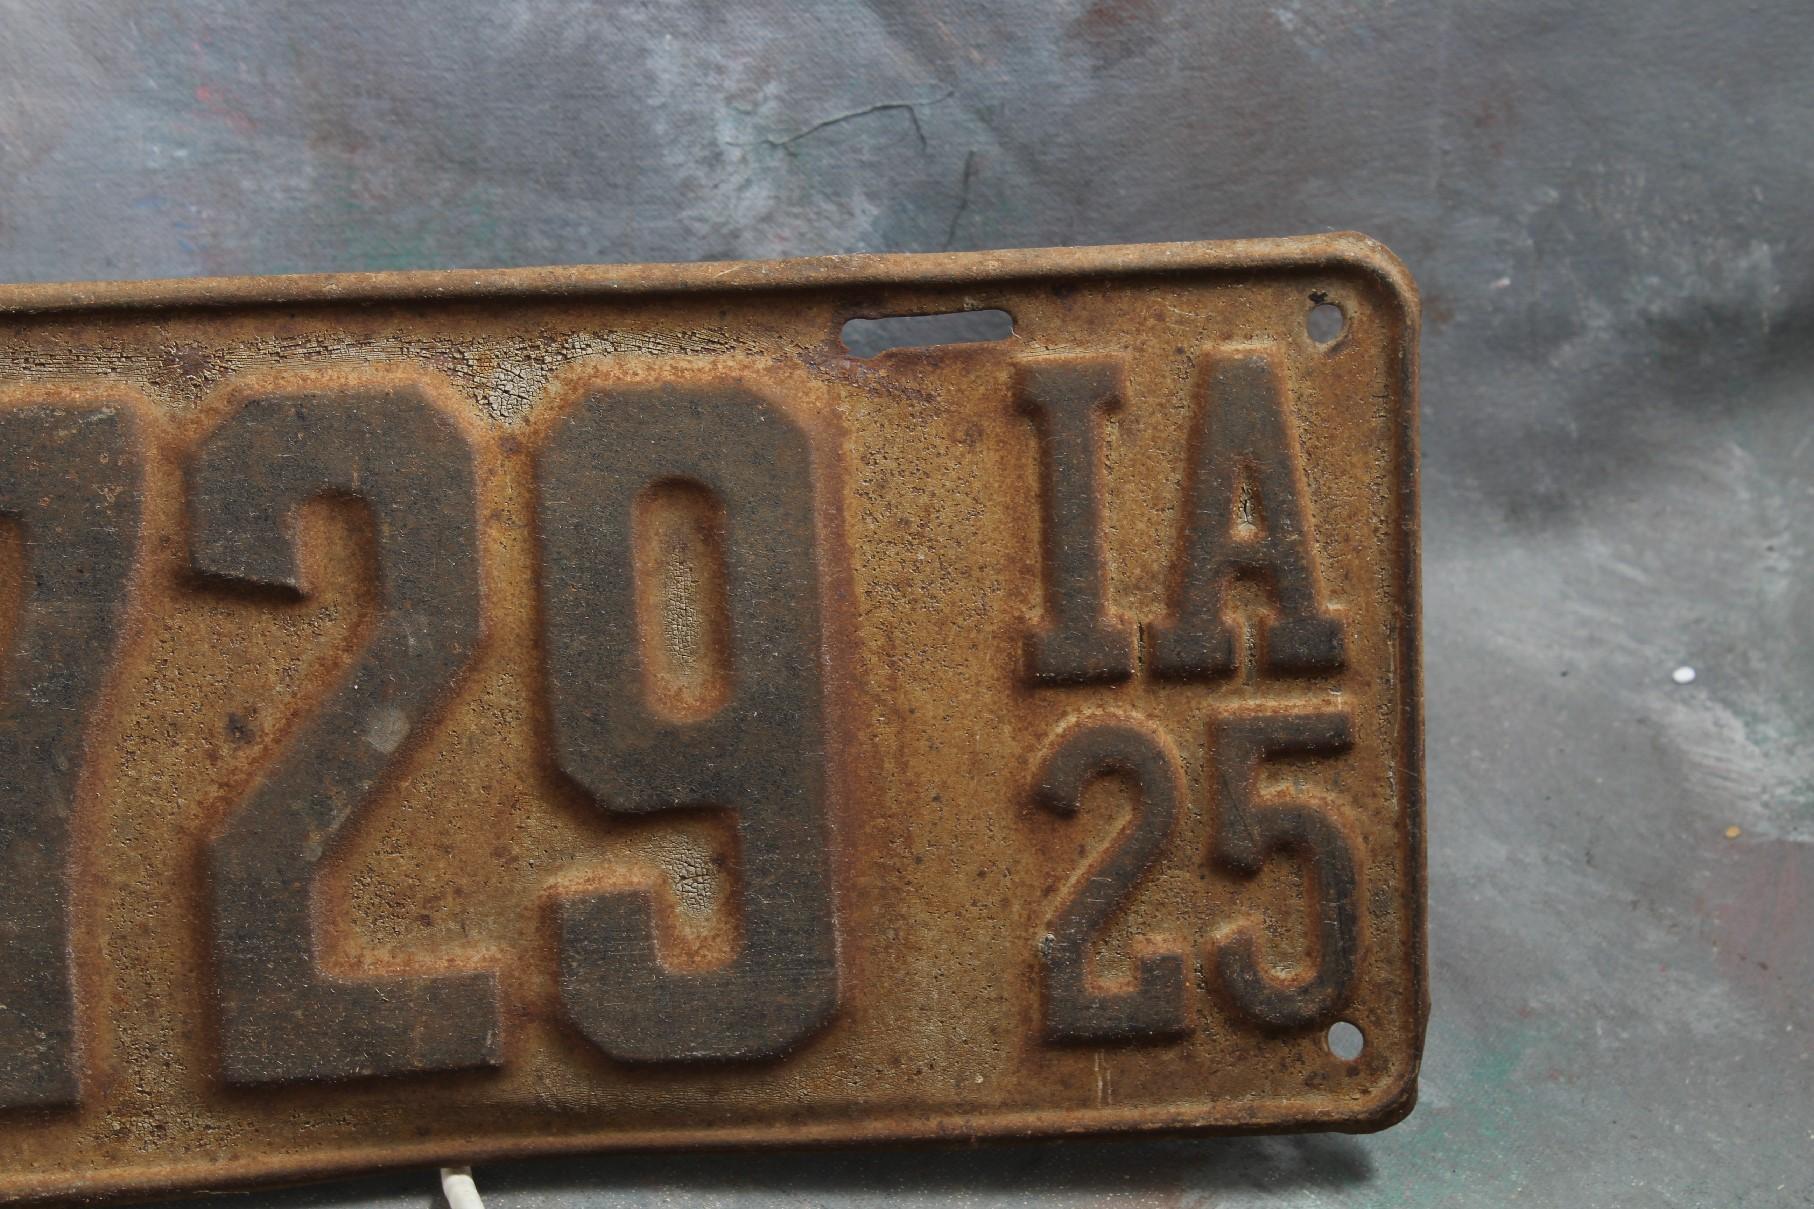 1925 Iowa License Plate